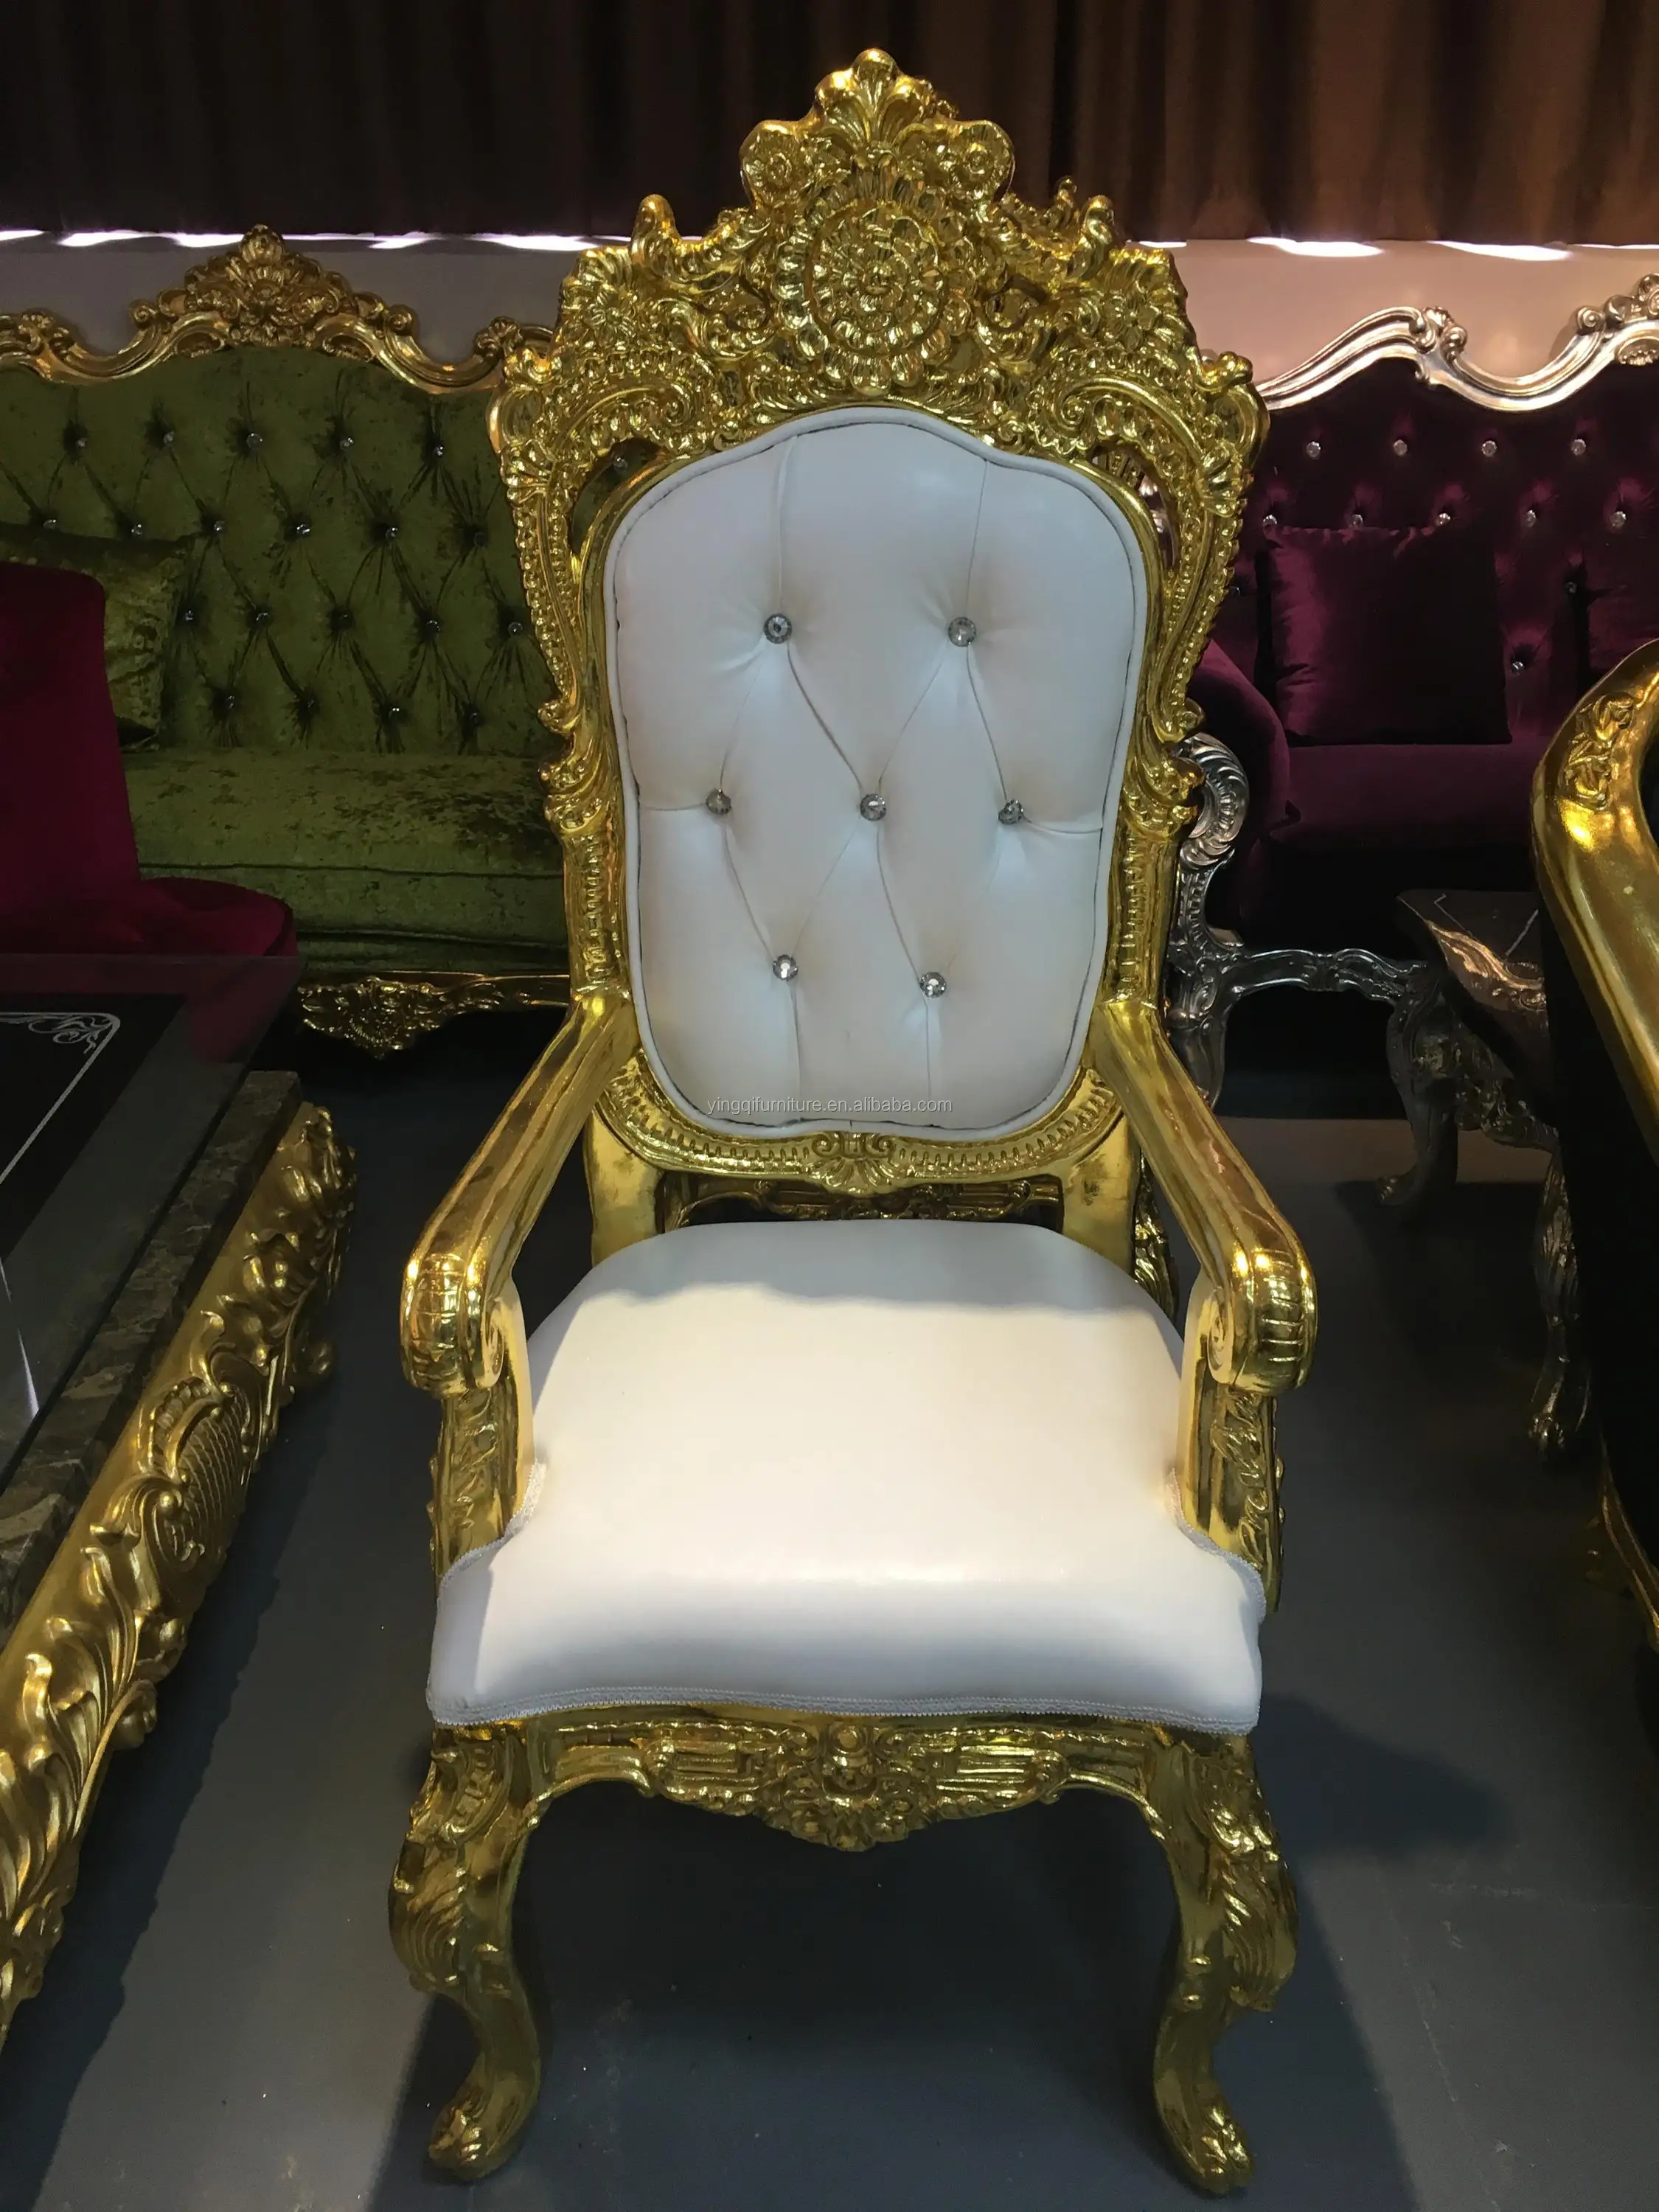 Italian Antique Wedding King Throne Chairs - Buy Antique King Throne